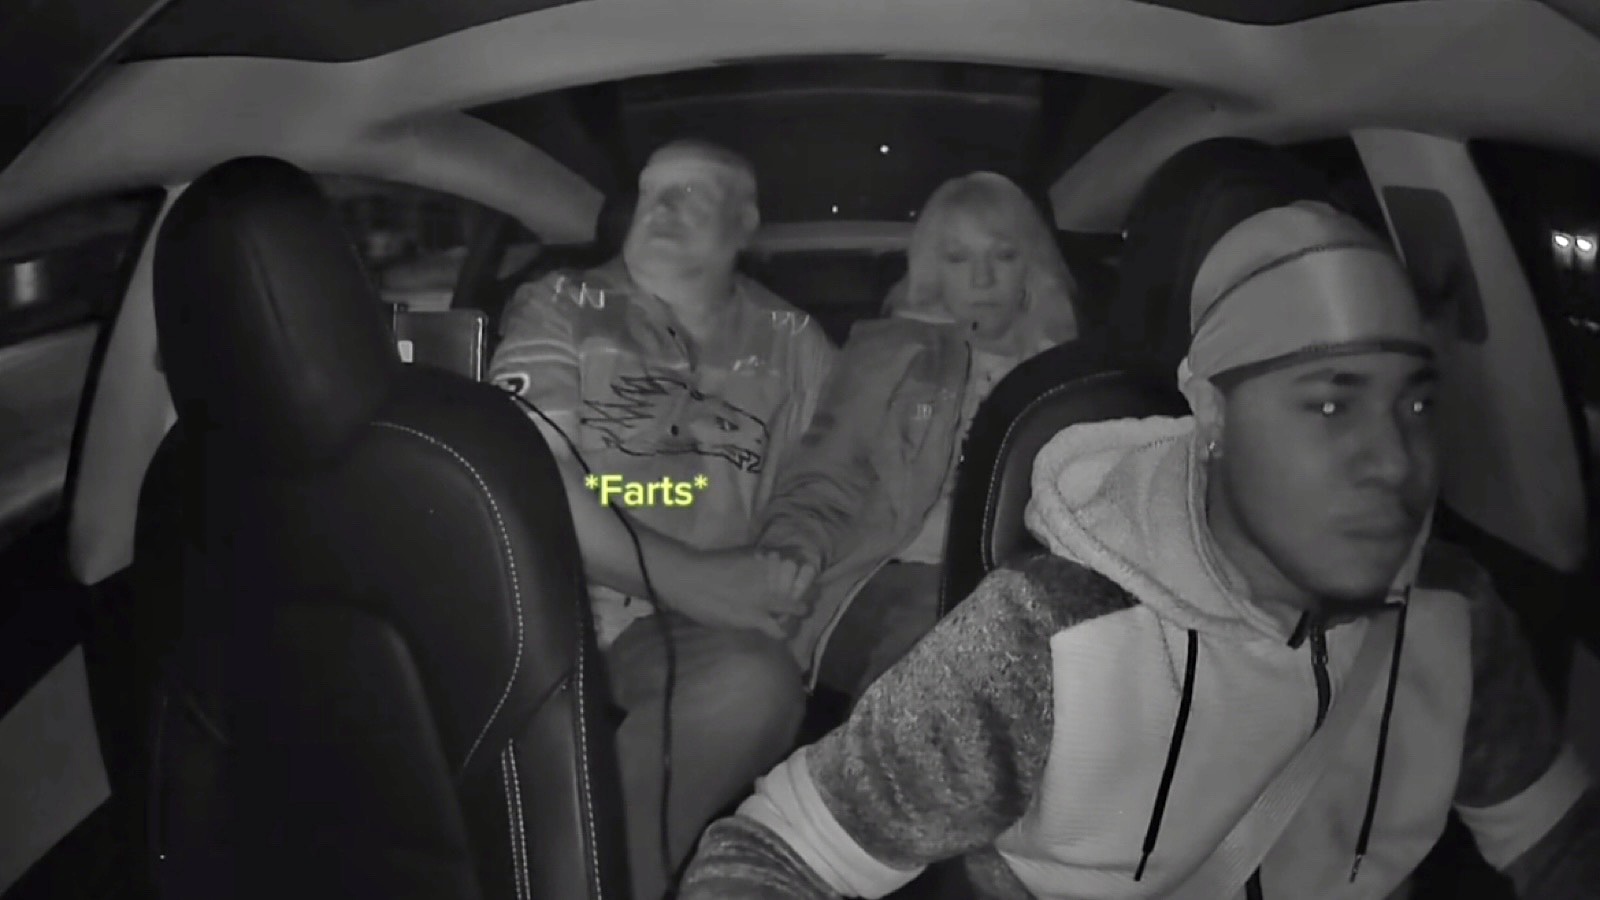 Uber driver’s hilarious farting prank earns him $100 tip